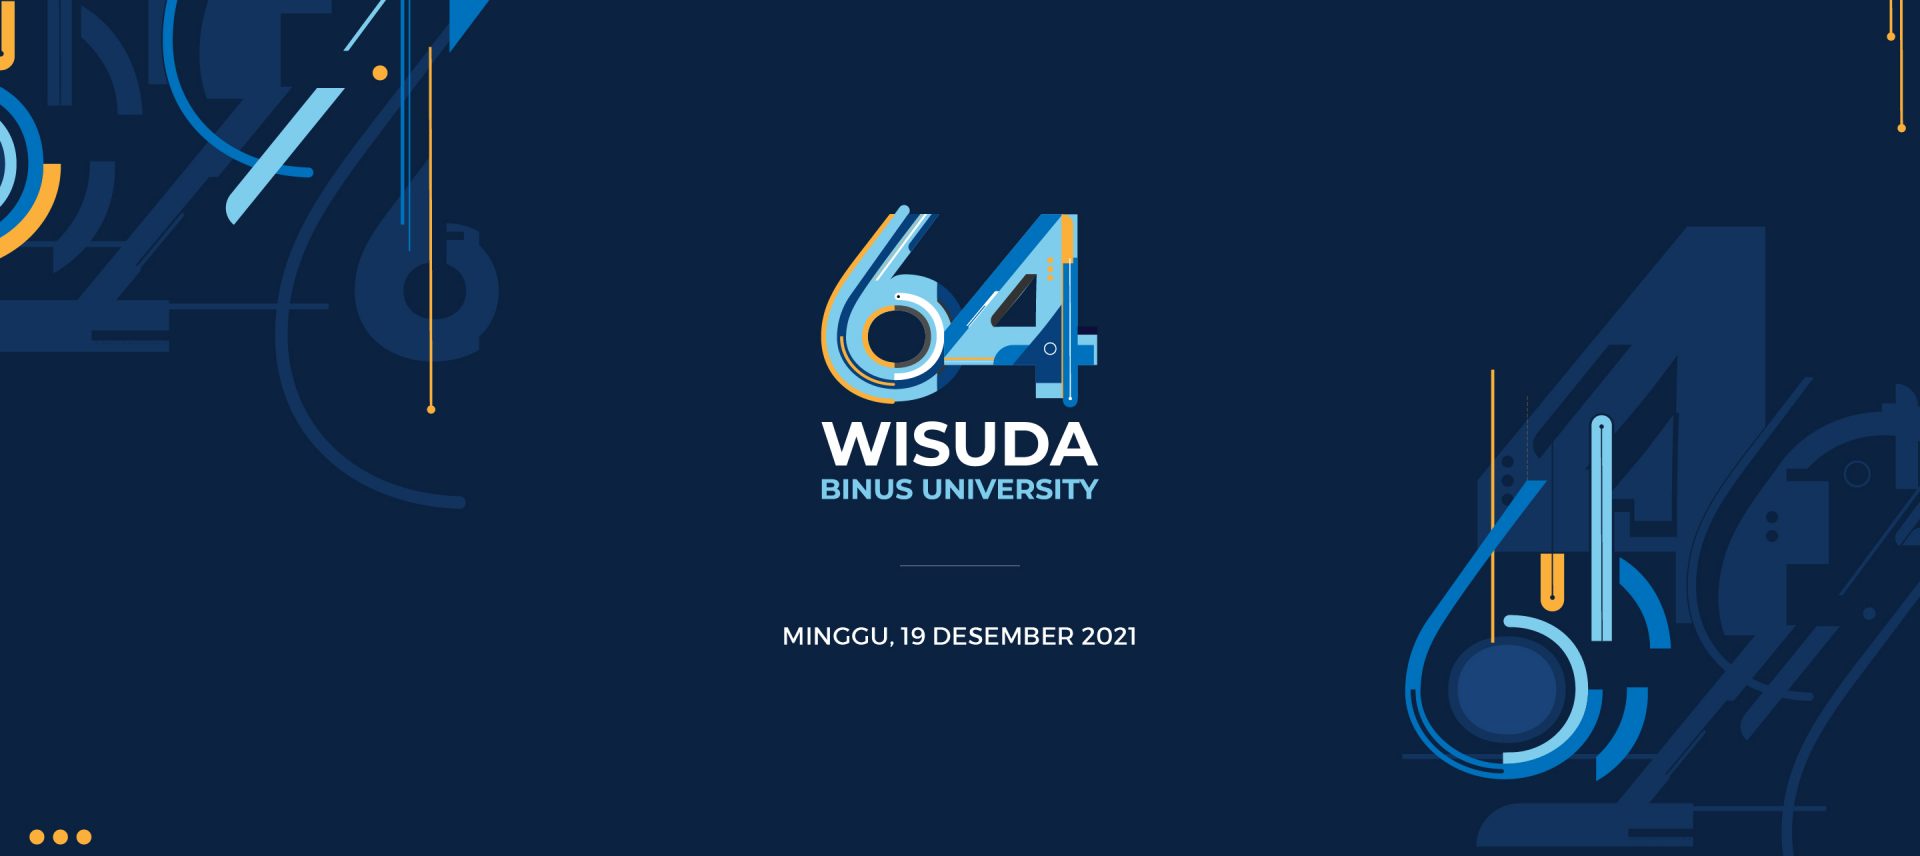 Alumni Recognition Award 2021 - Wisuda 64